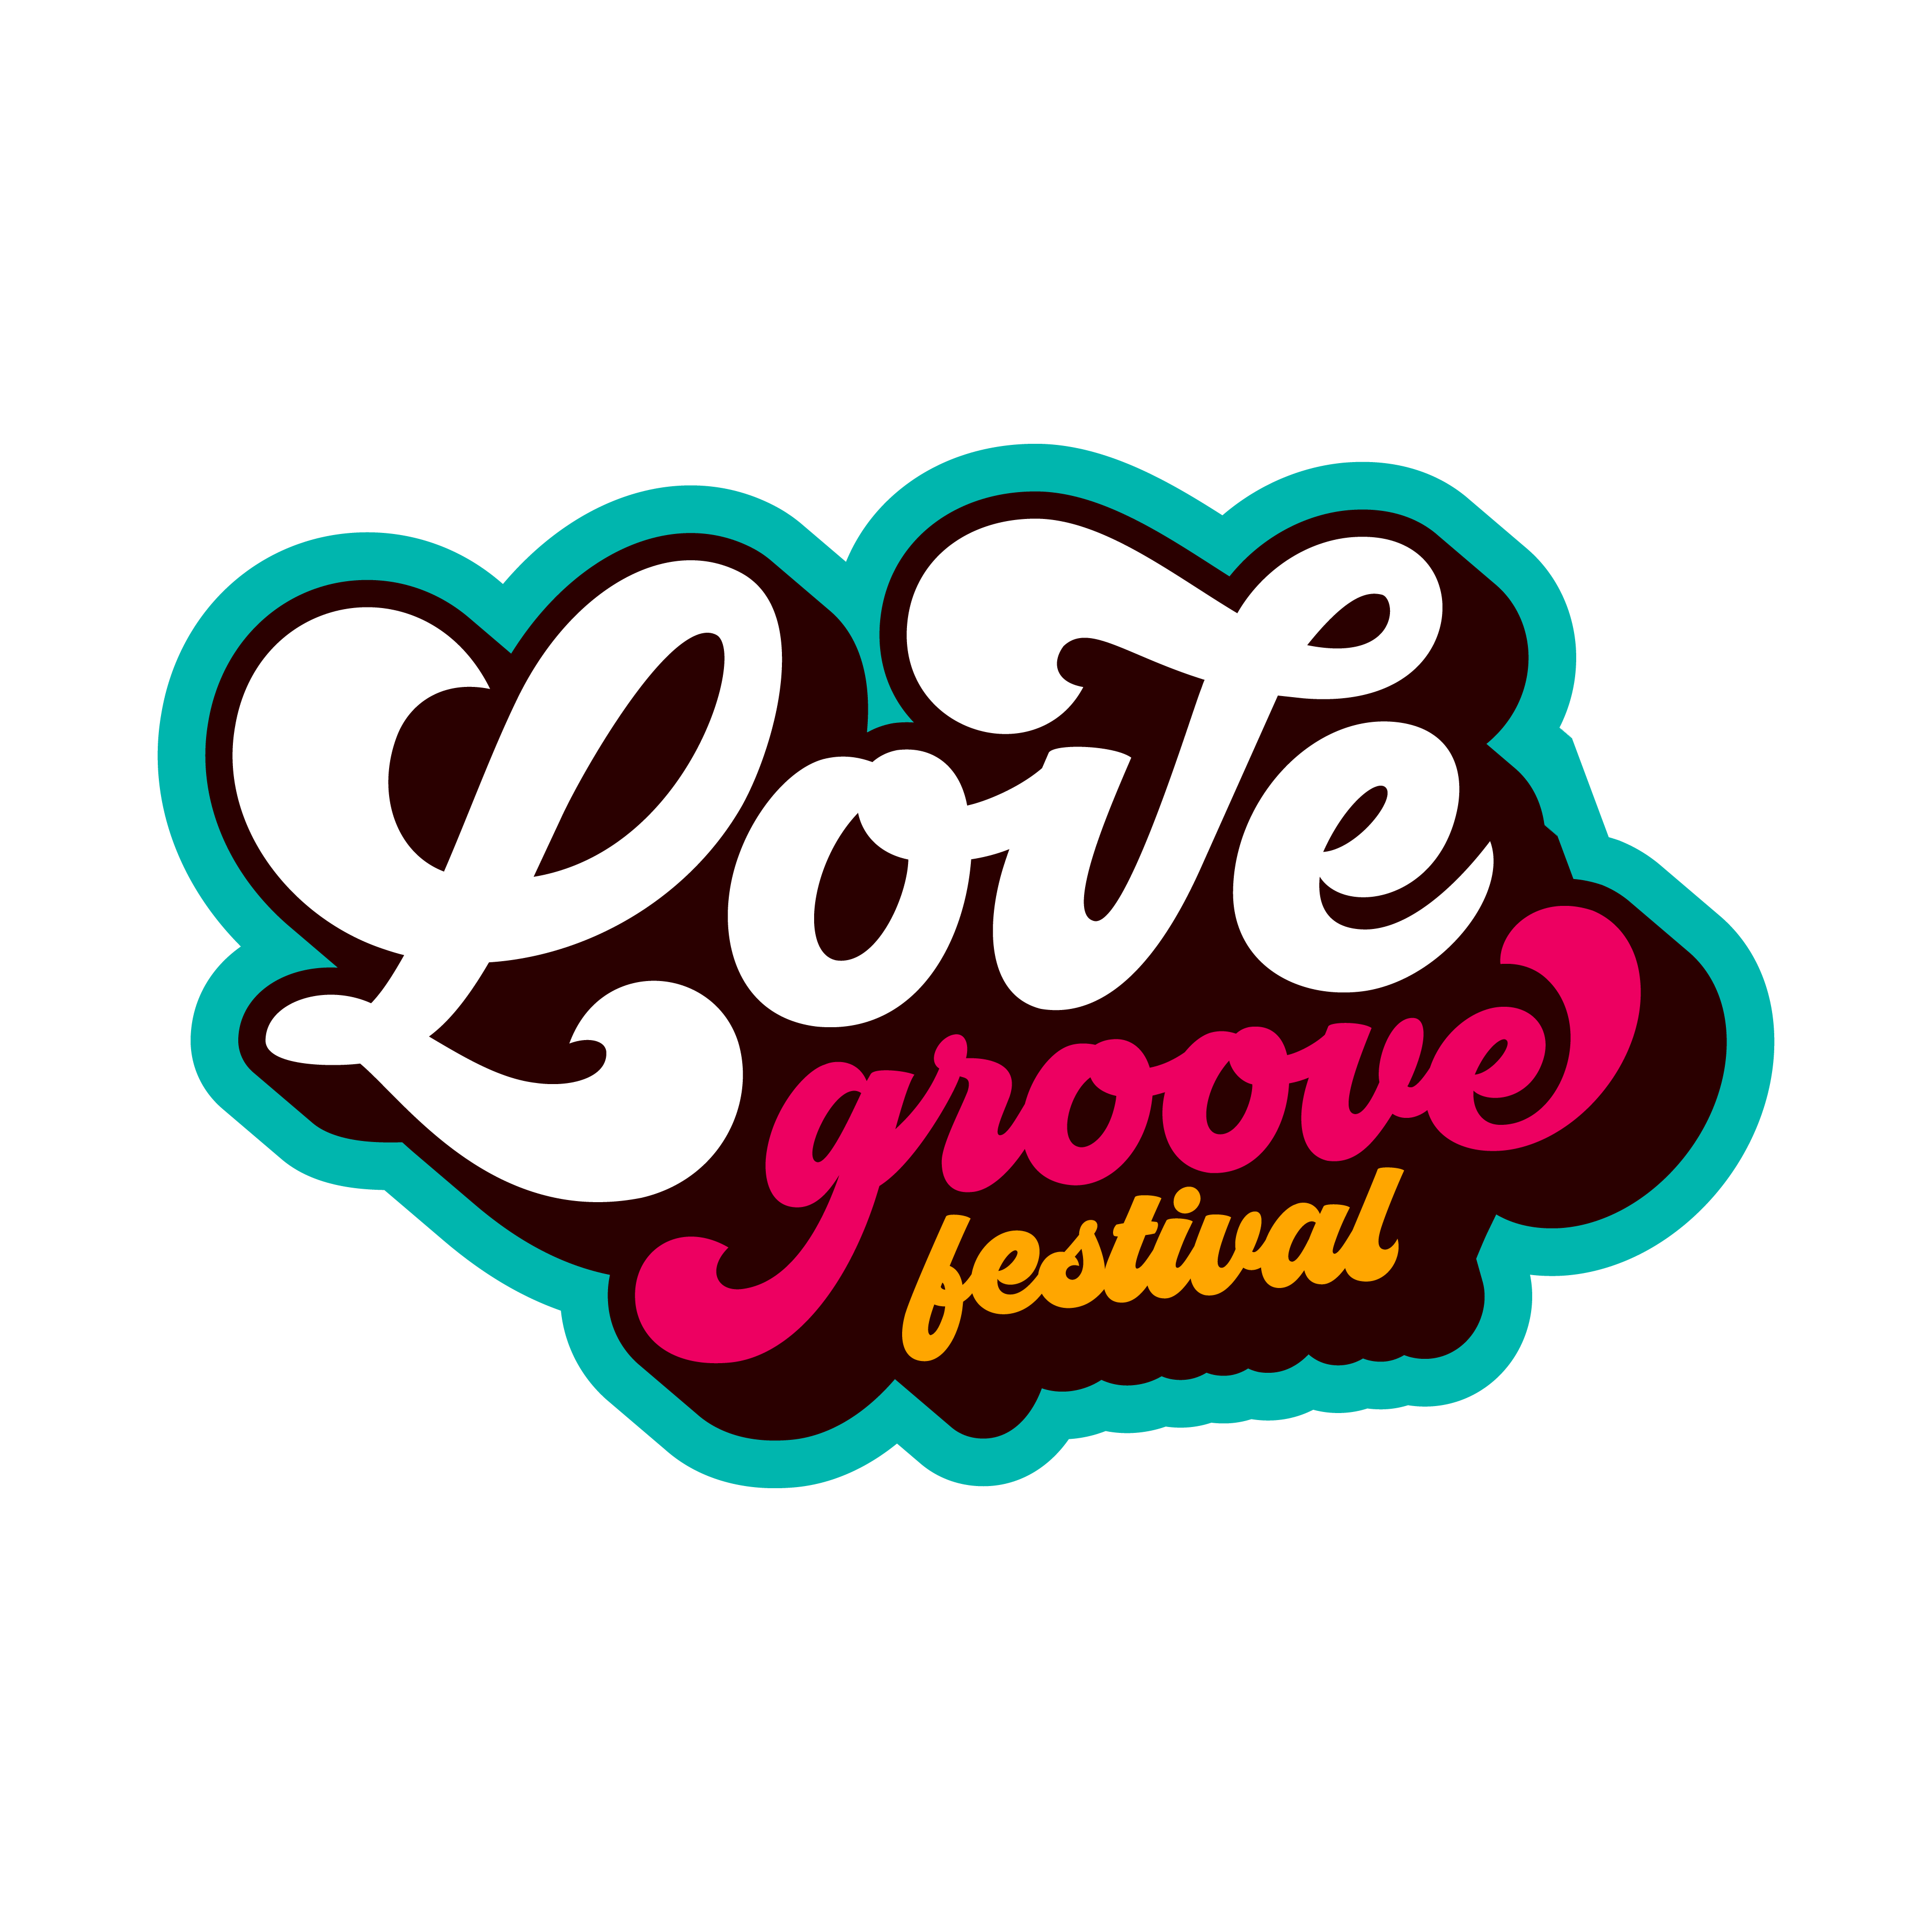 Love Groove Festival